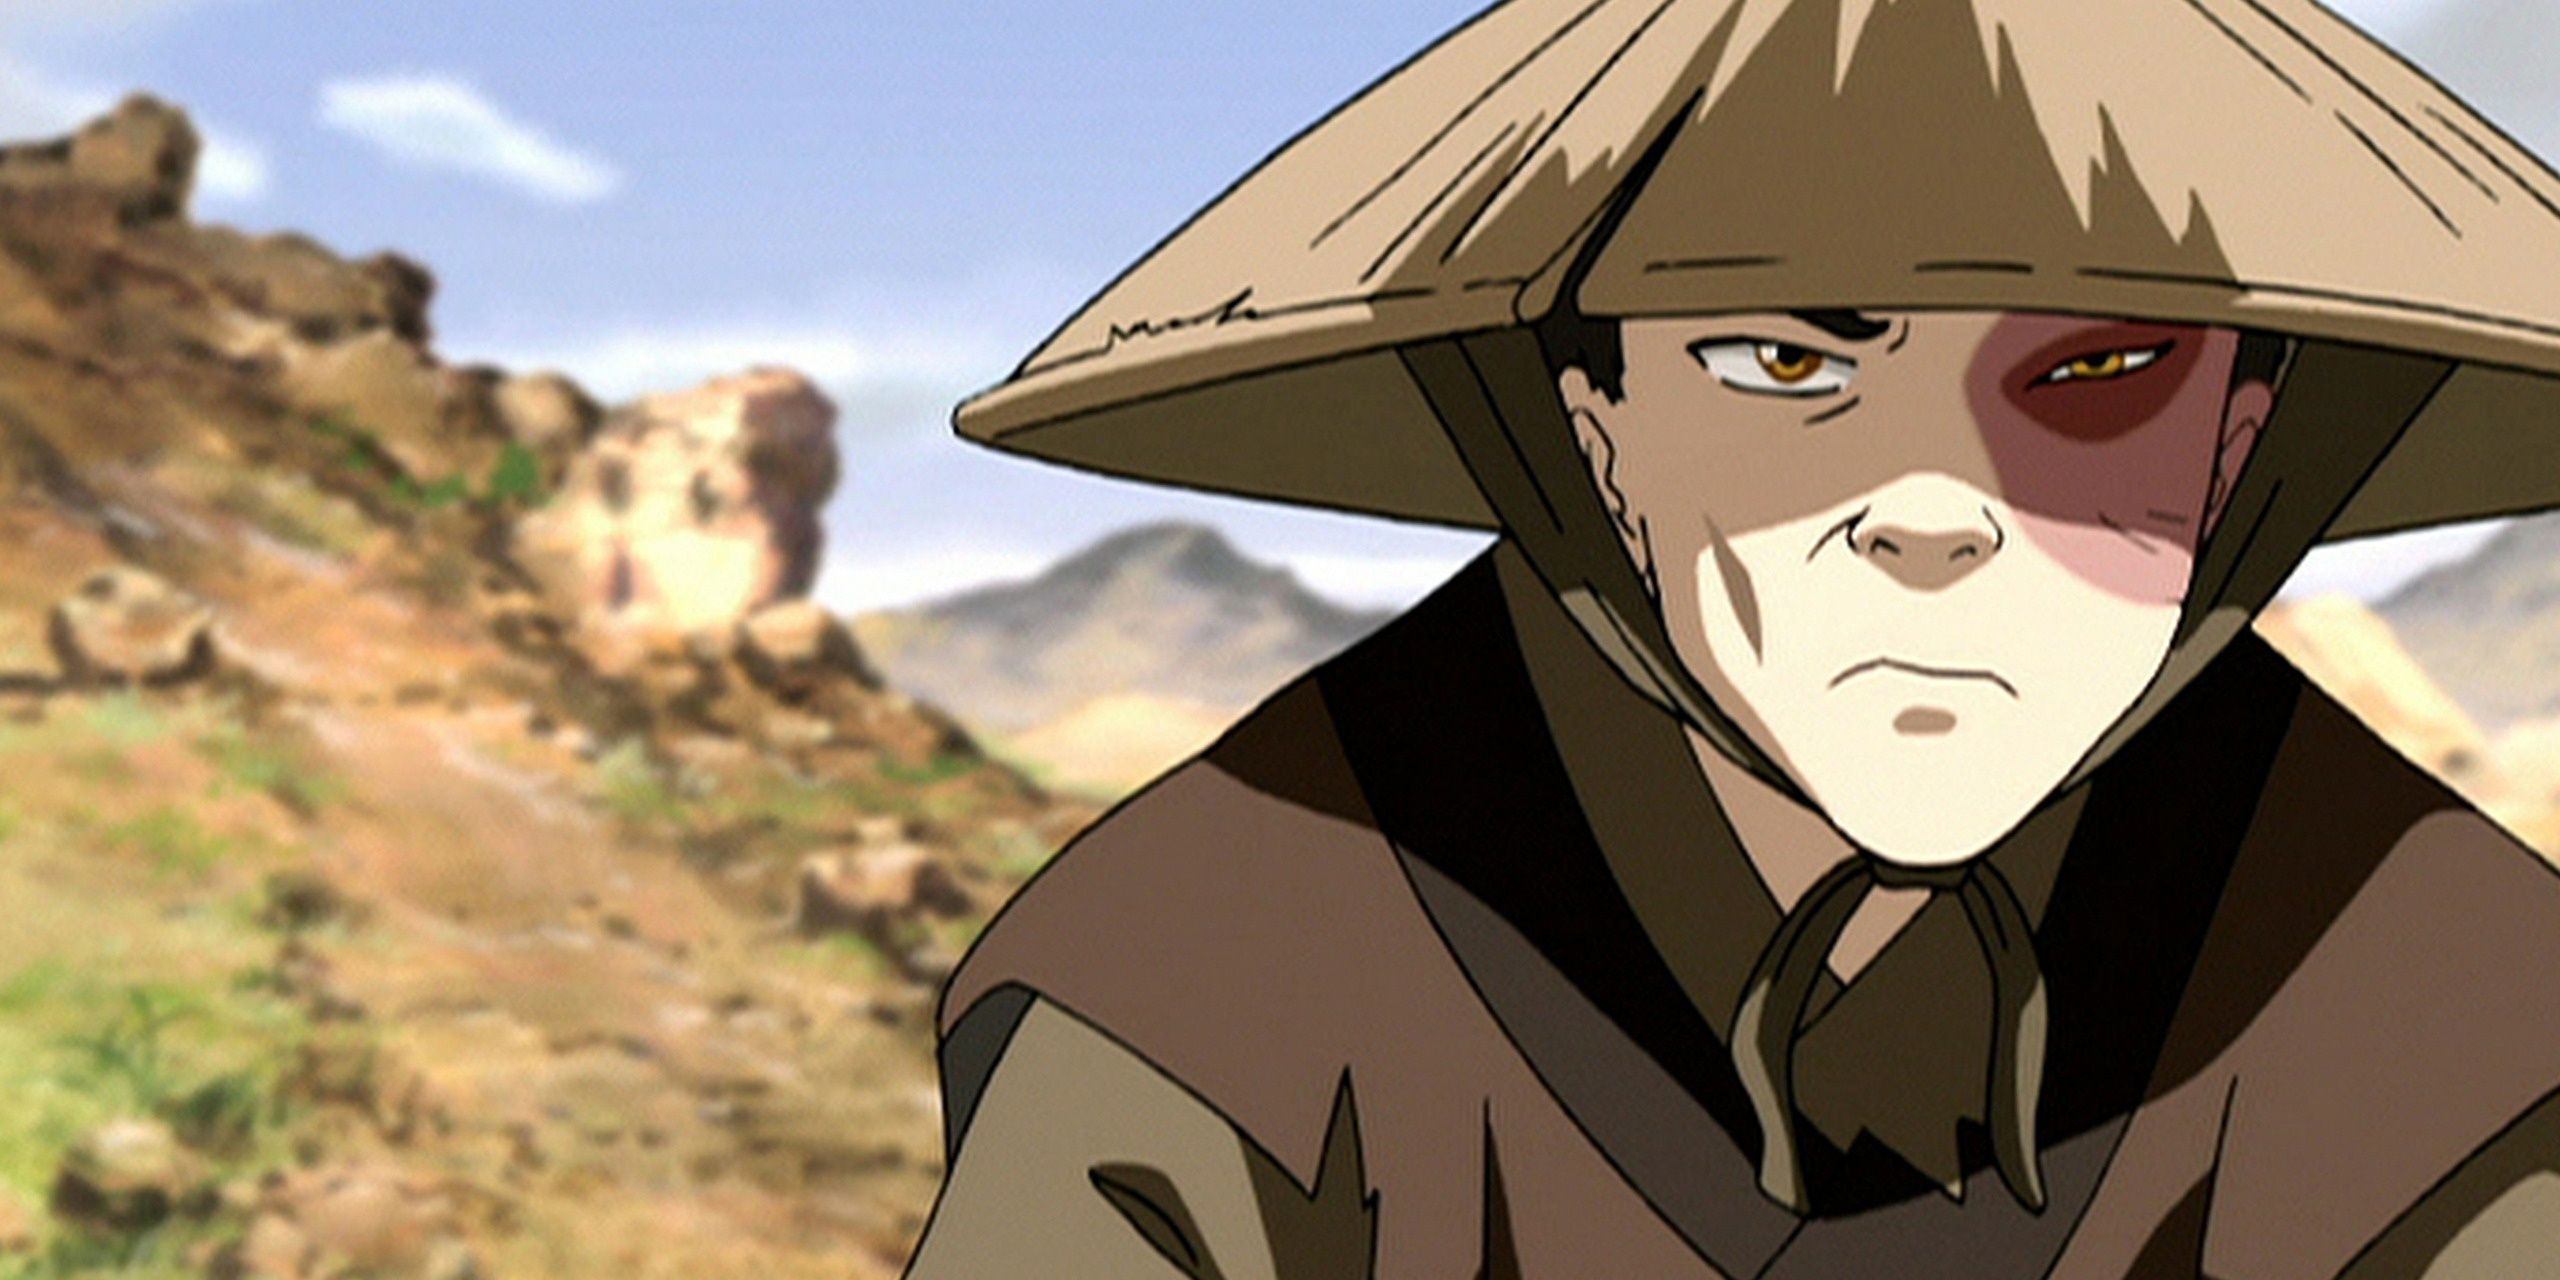 Zuko alone in Avatar: The Last Airbender